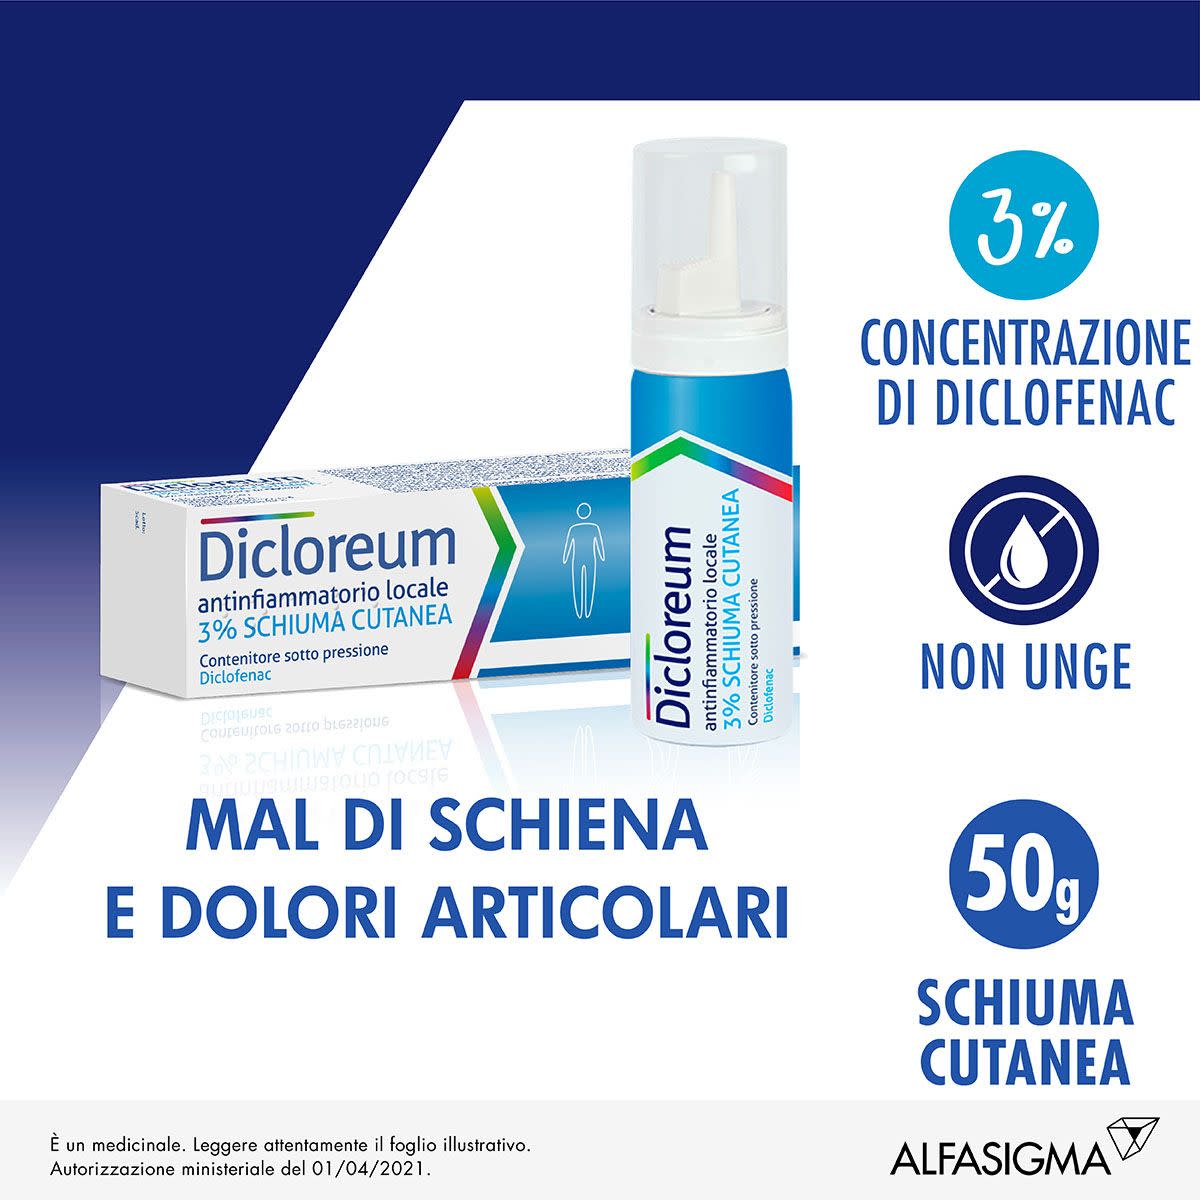 042685040 - Dicloreum Antinfiammatorio Locale 3% schiuma cutanea 50g - 7866925_4.jpg